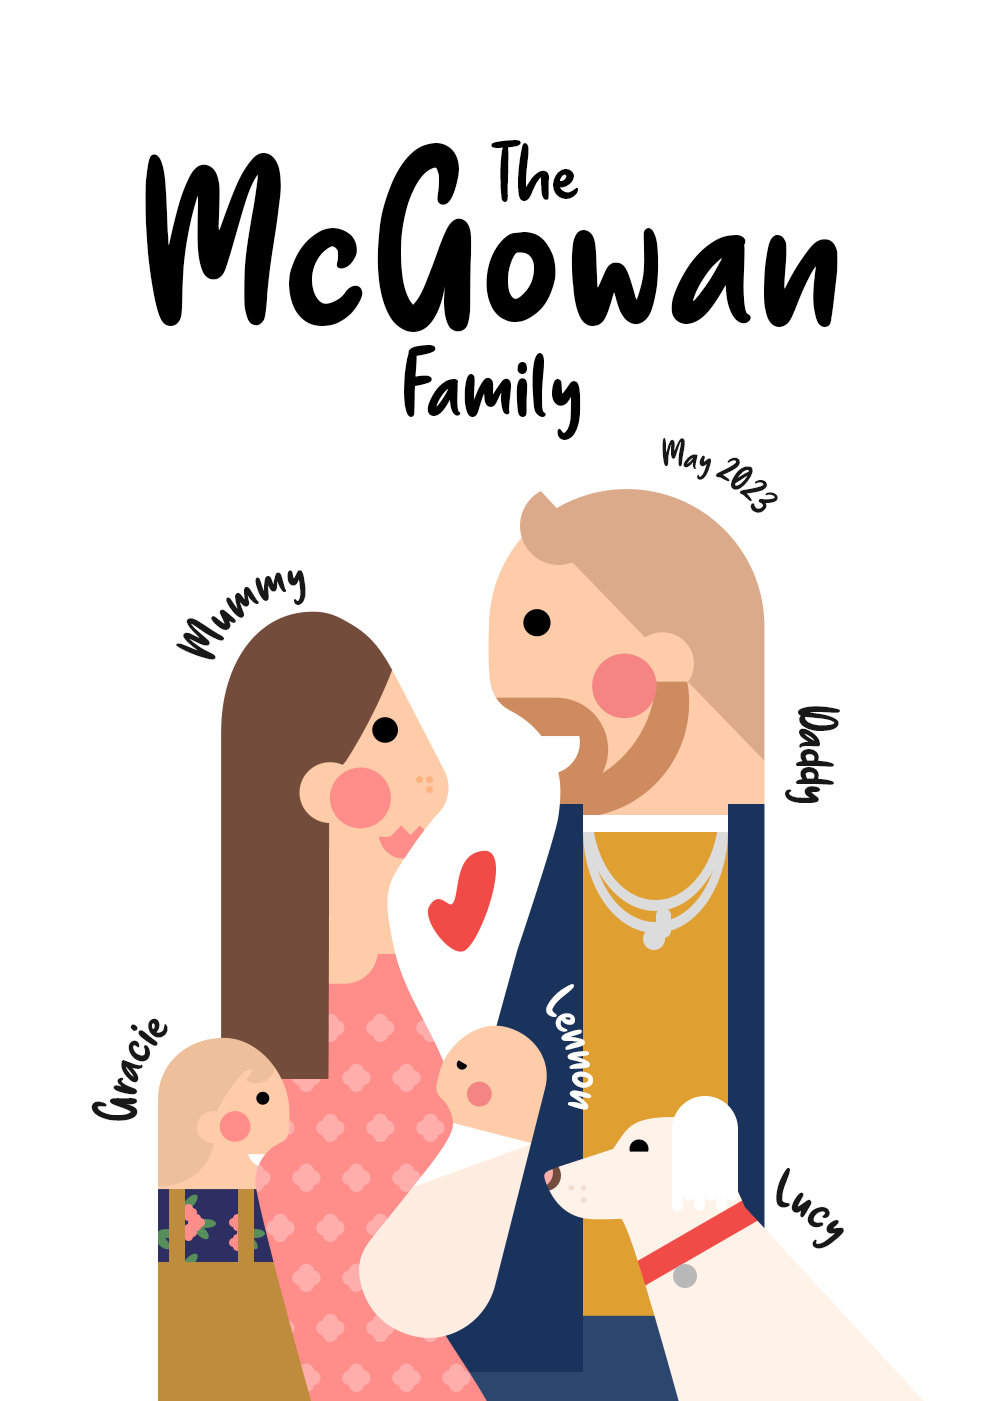 Custom Family Portrait With Pets Frame, Cartoon Wall Art, Illustration From Photo